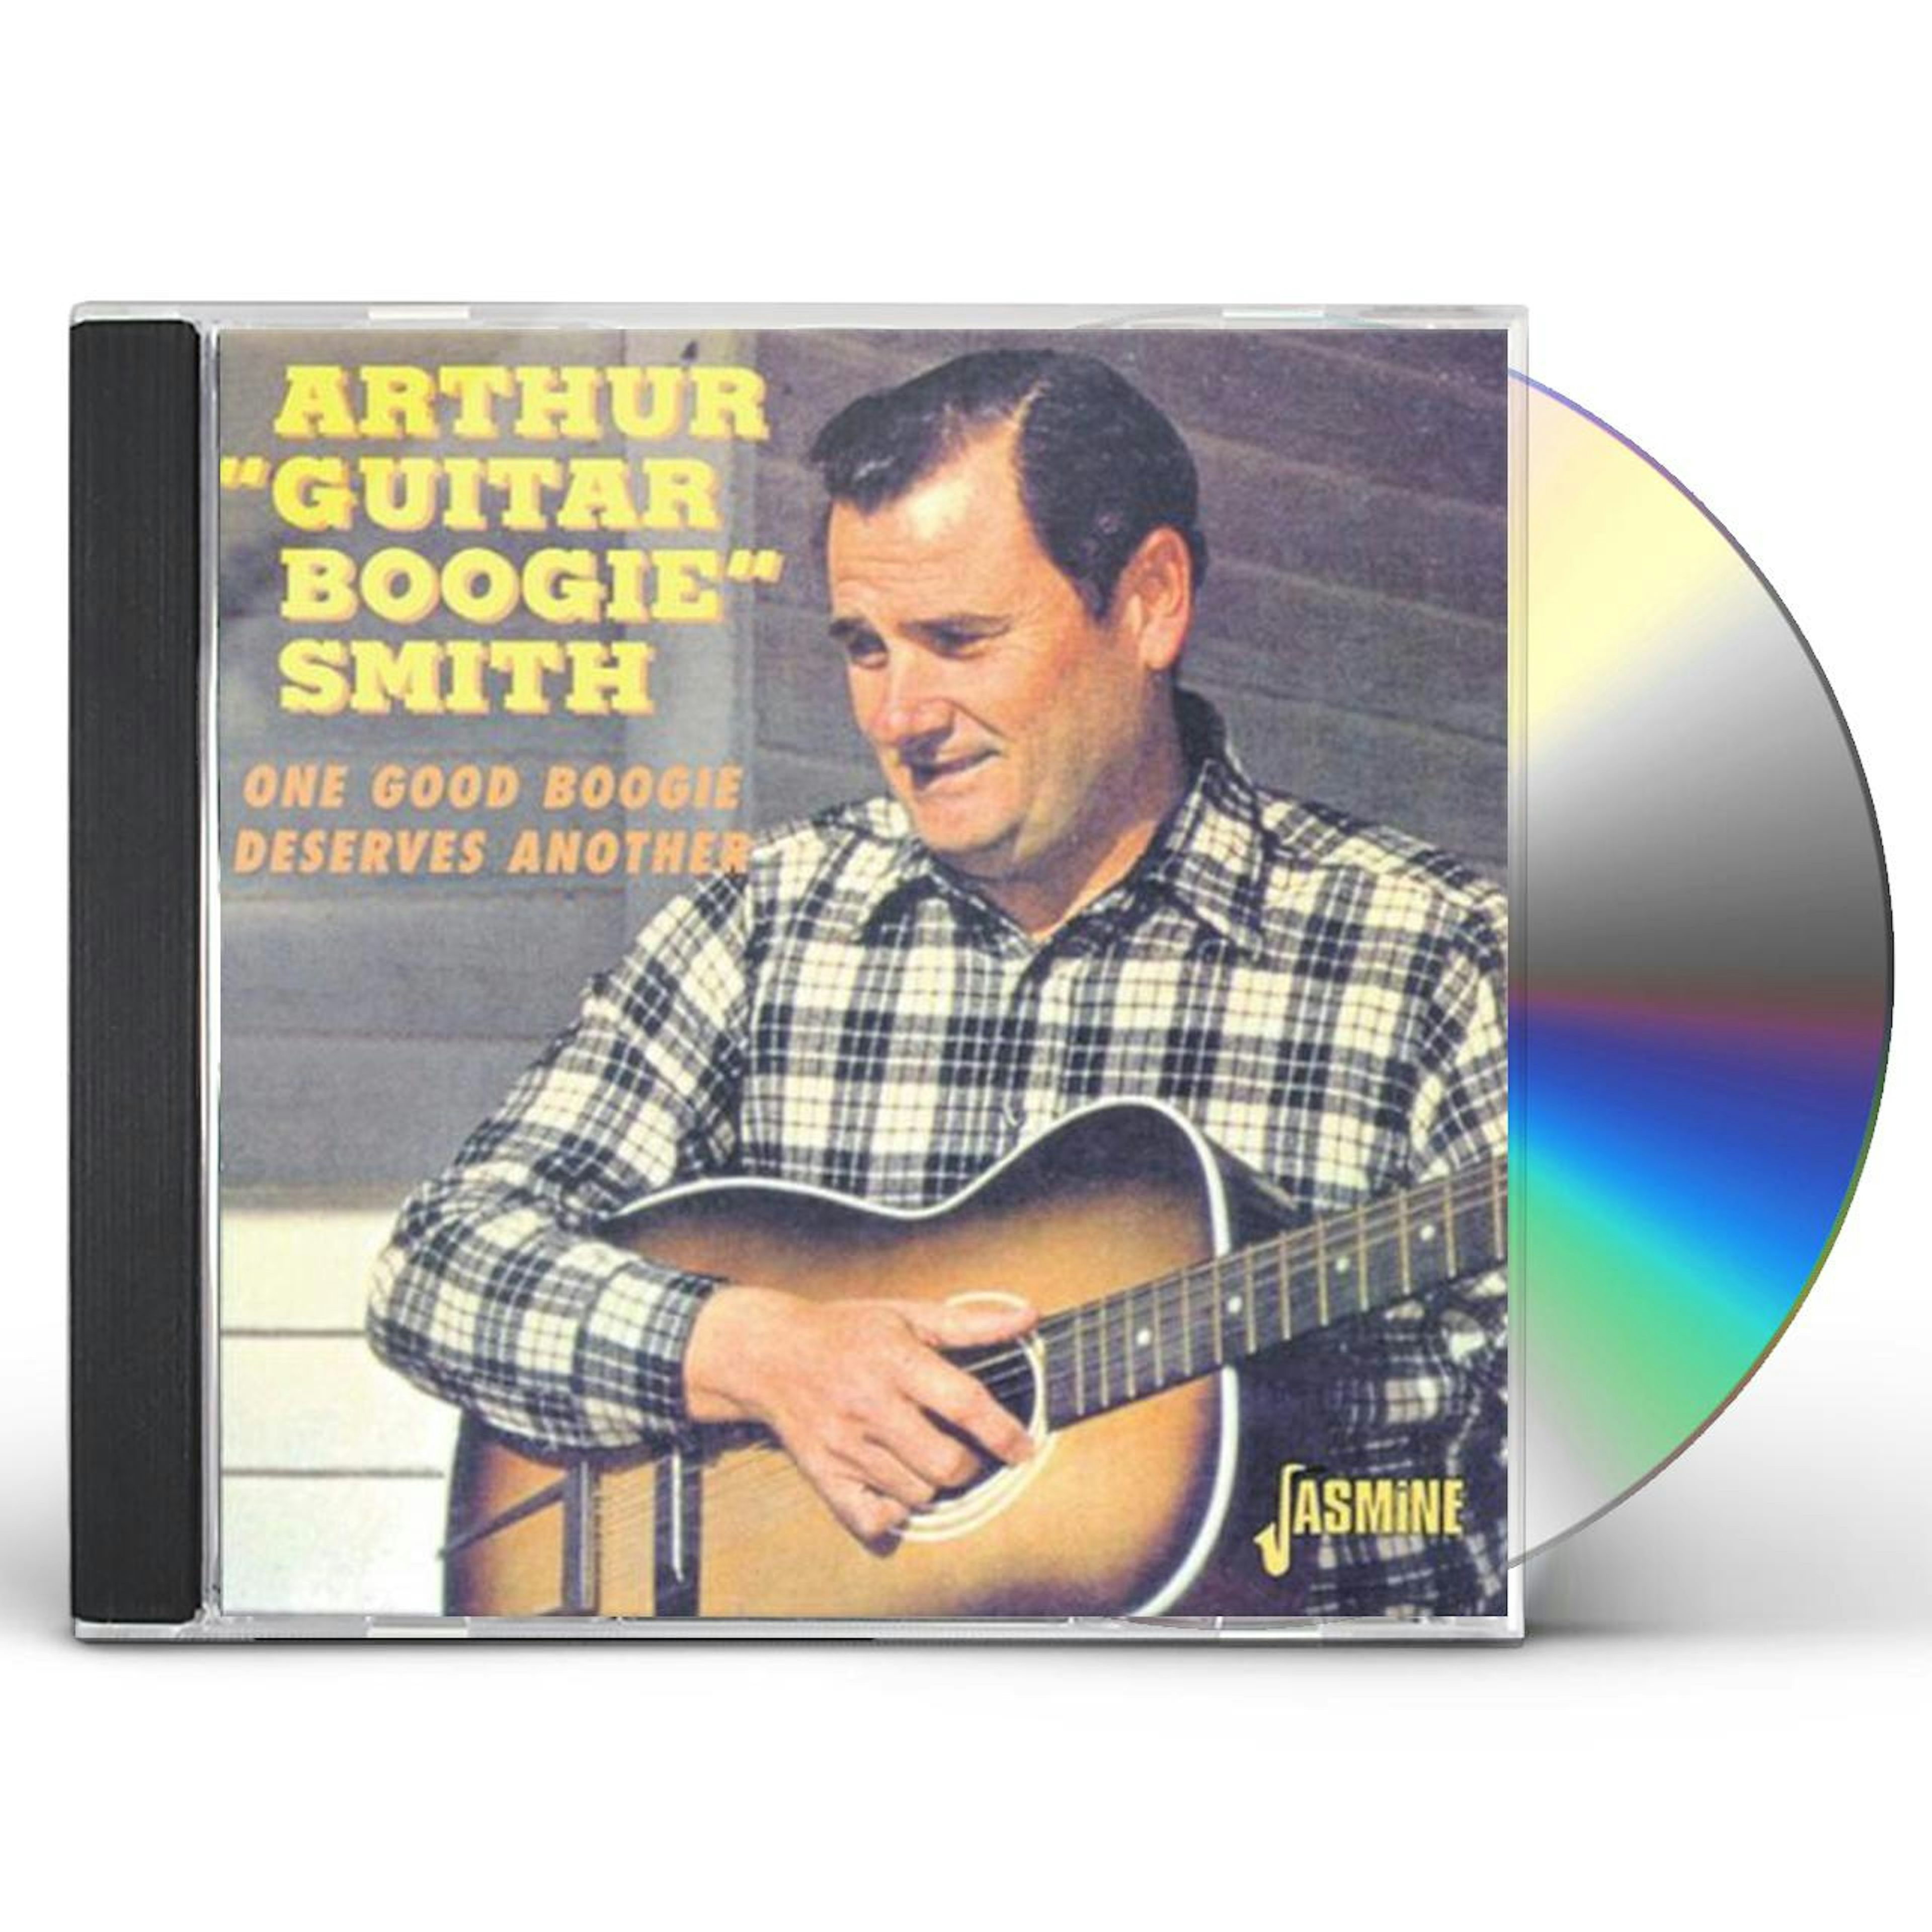 Arthur 'Guitar Boogie' ONE GOOD BOOGIE ANOTHER CD